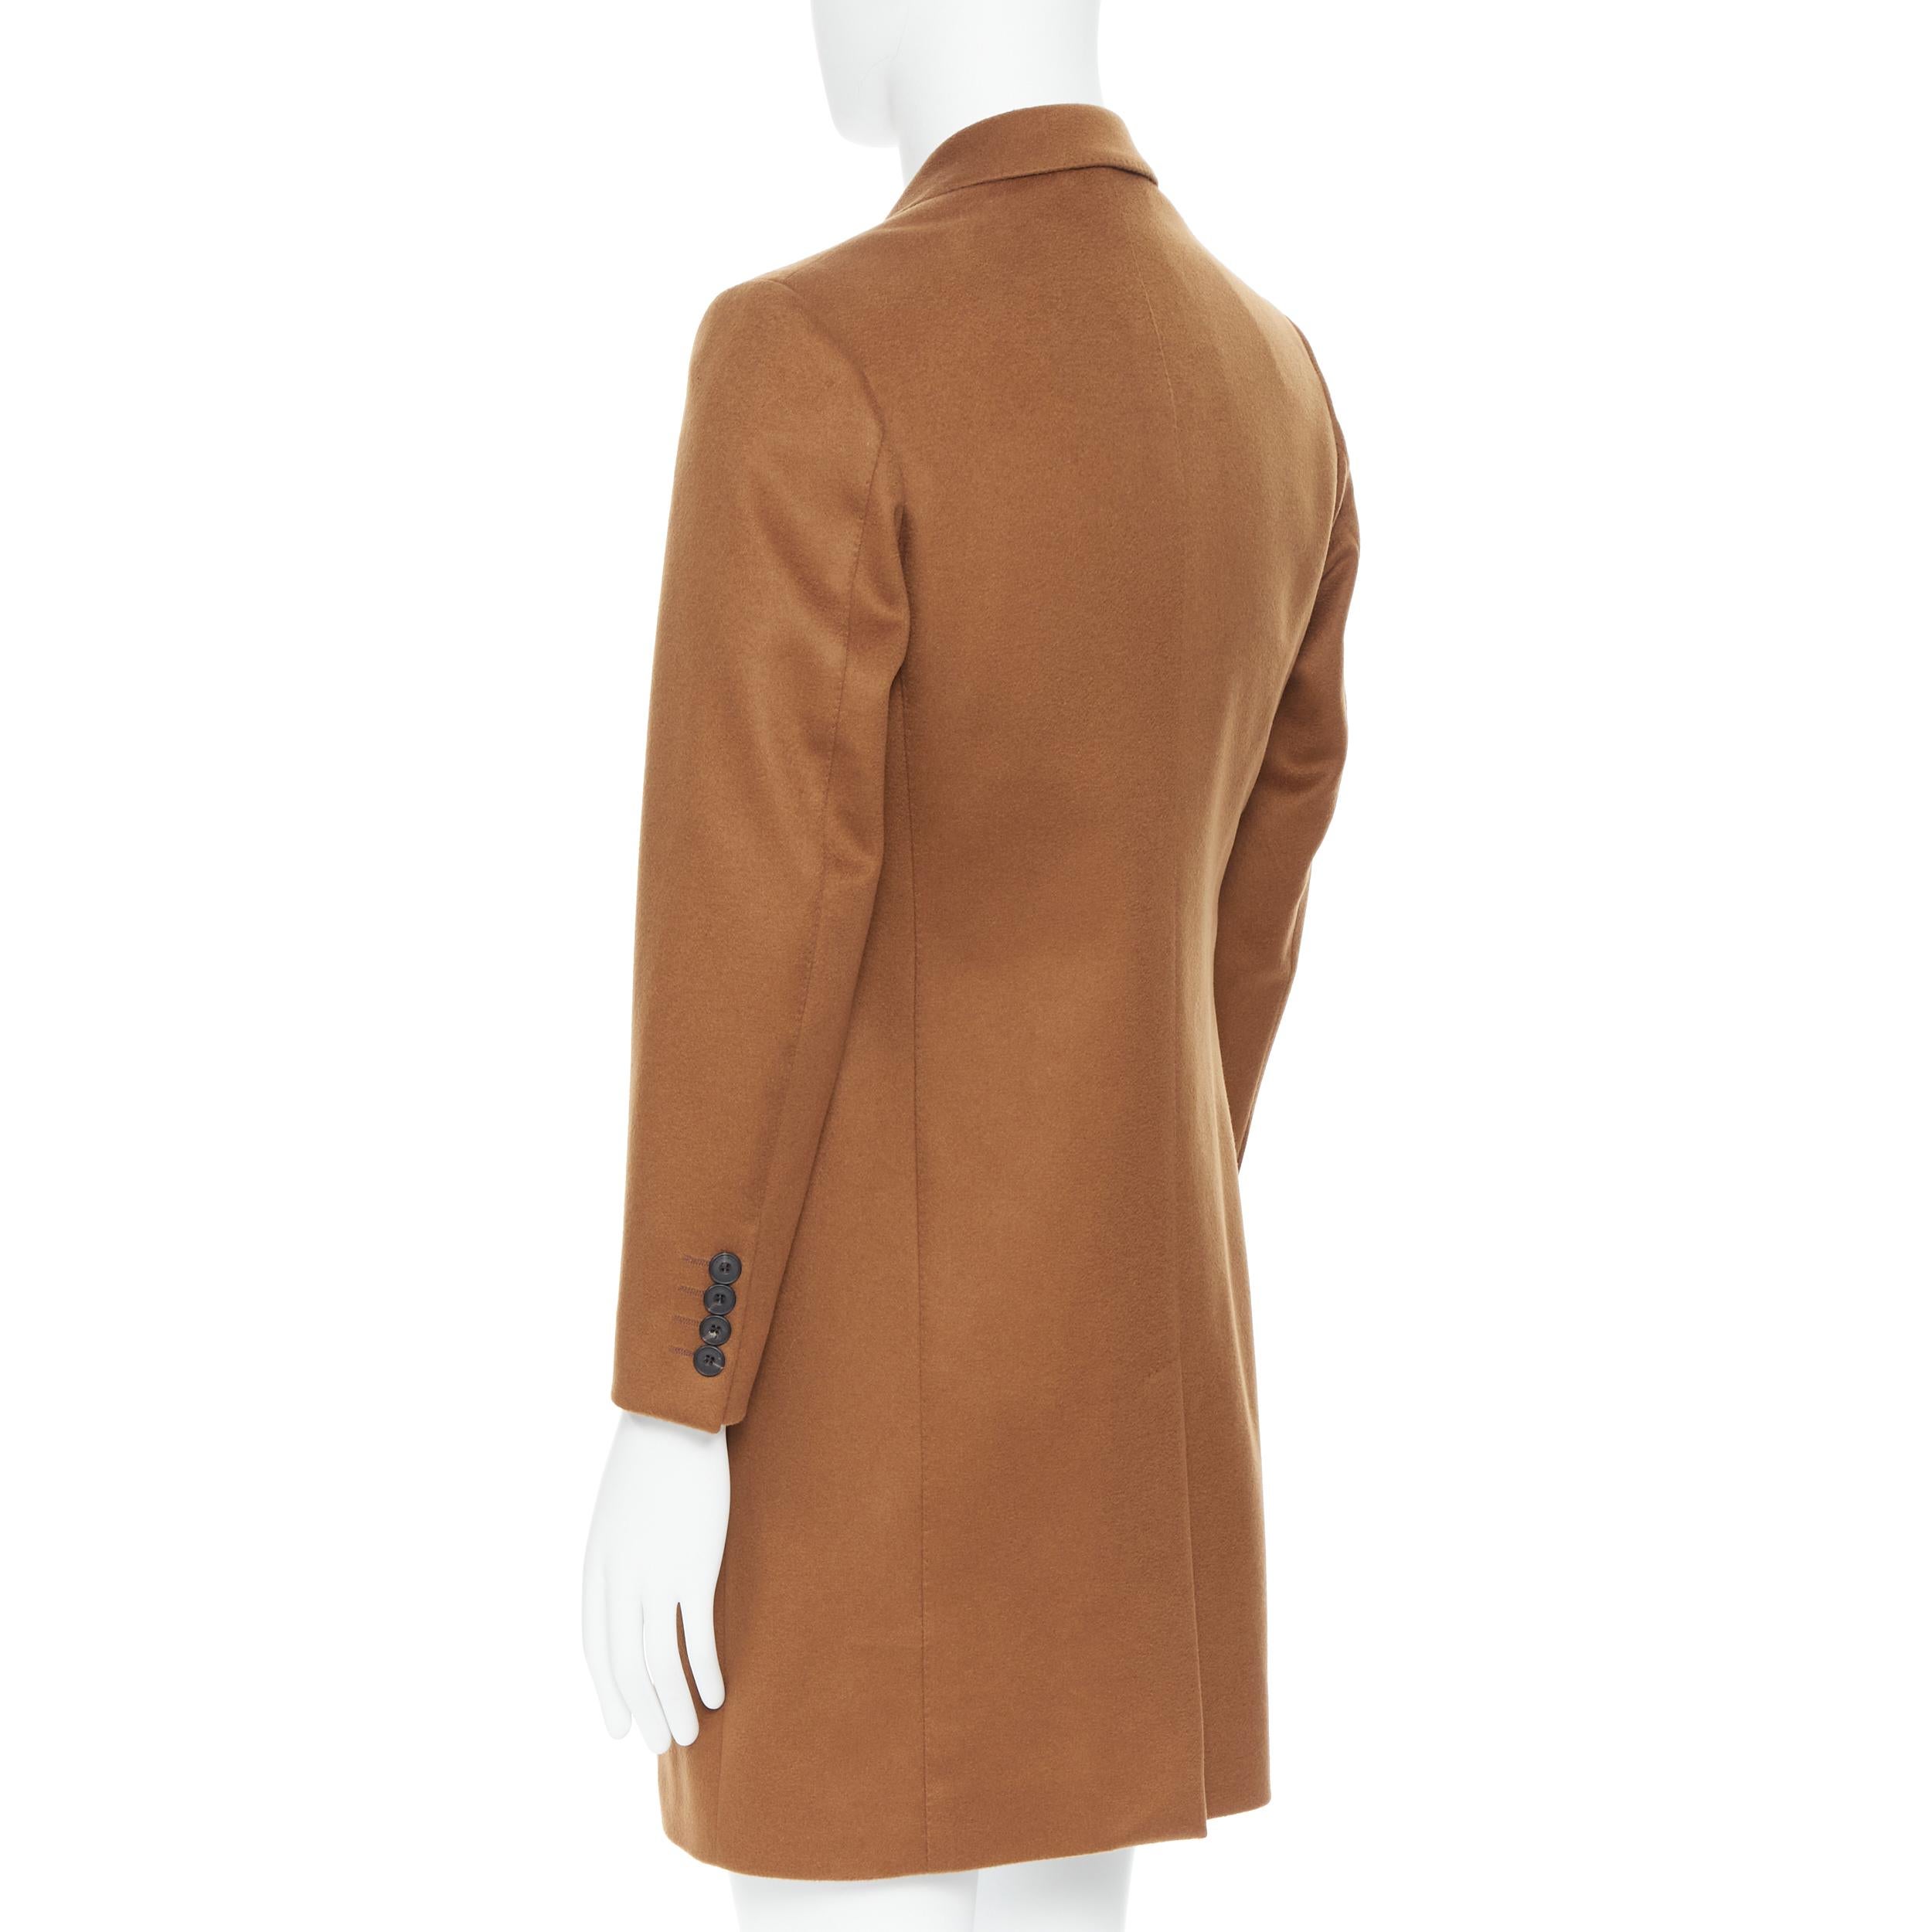 Men's BURBERRY PRORSUM 100% cashmere camel brown tailored coat EU44 XS